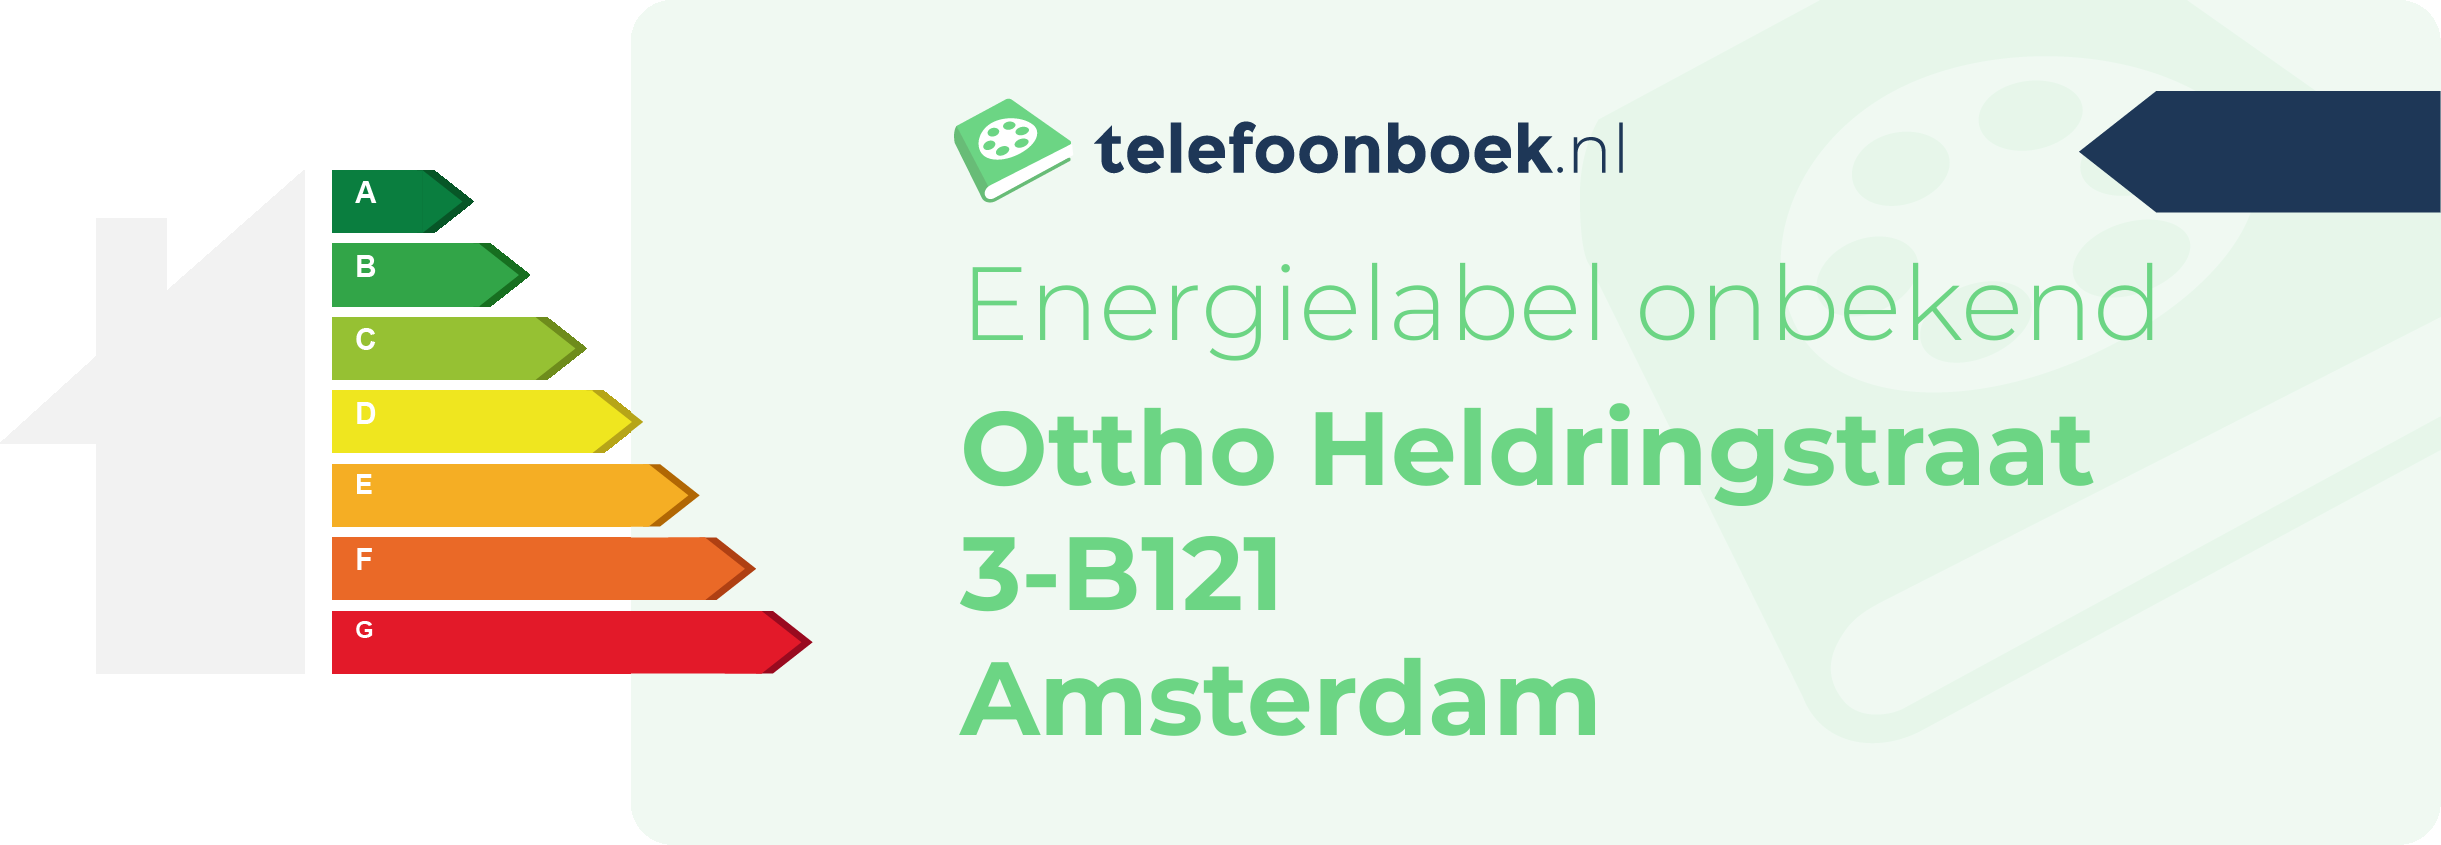 Energielabel Ottho Heldringstraat 3-B121 Amsterdam